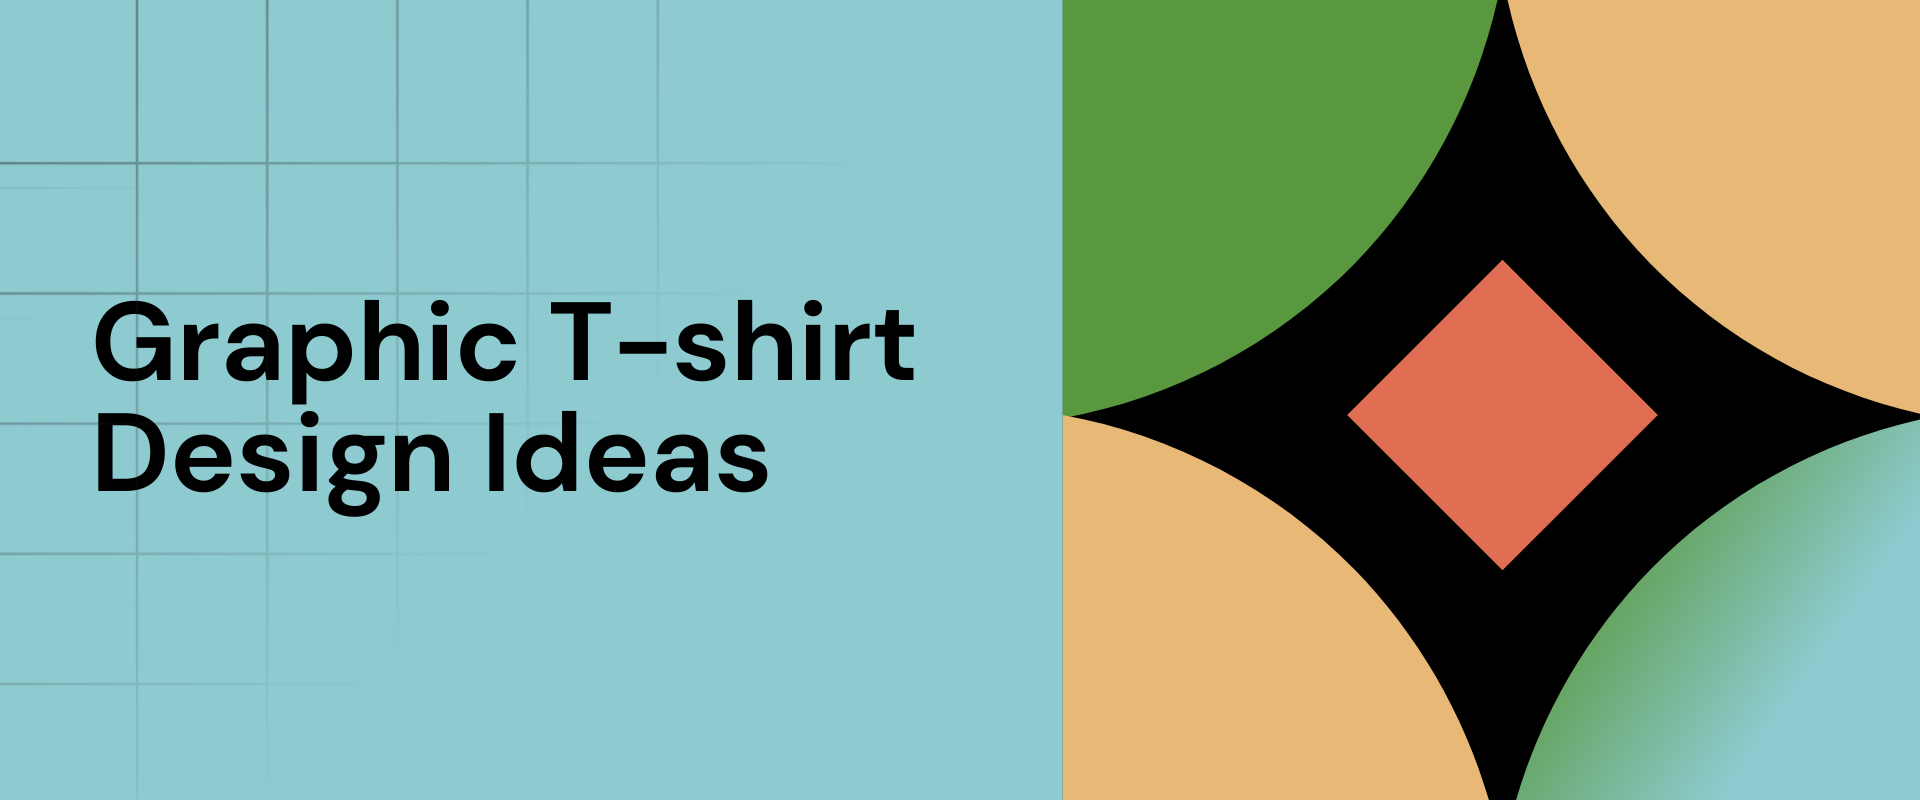 Graphic t-shirt design ideas.png